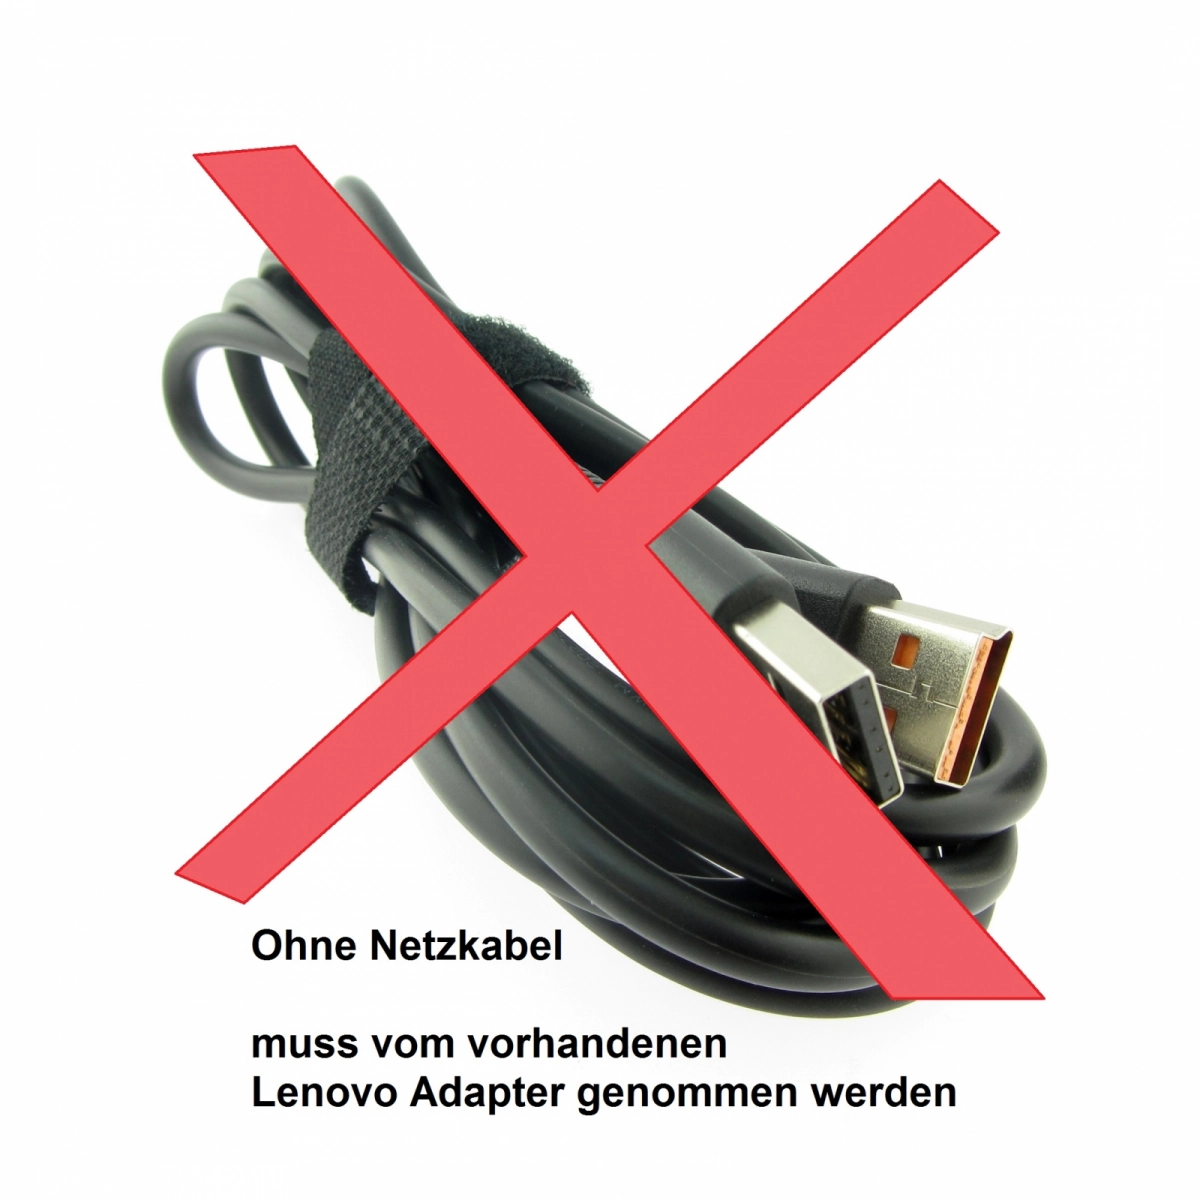 Original Netzteil für LENOVO ADL40WCB 36200580, 20V, 2A, Stecker USB, ohne USB-Kabel